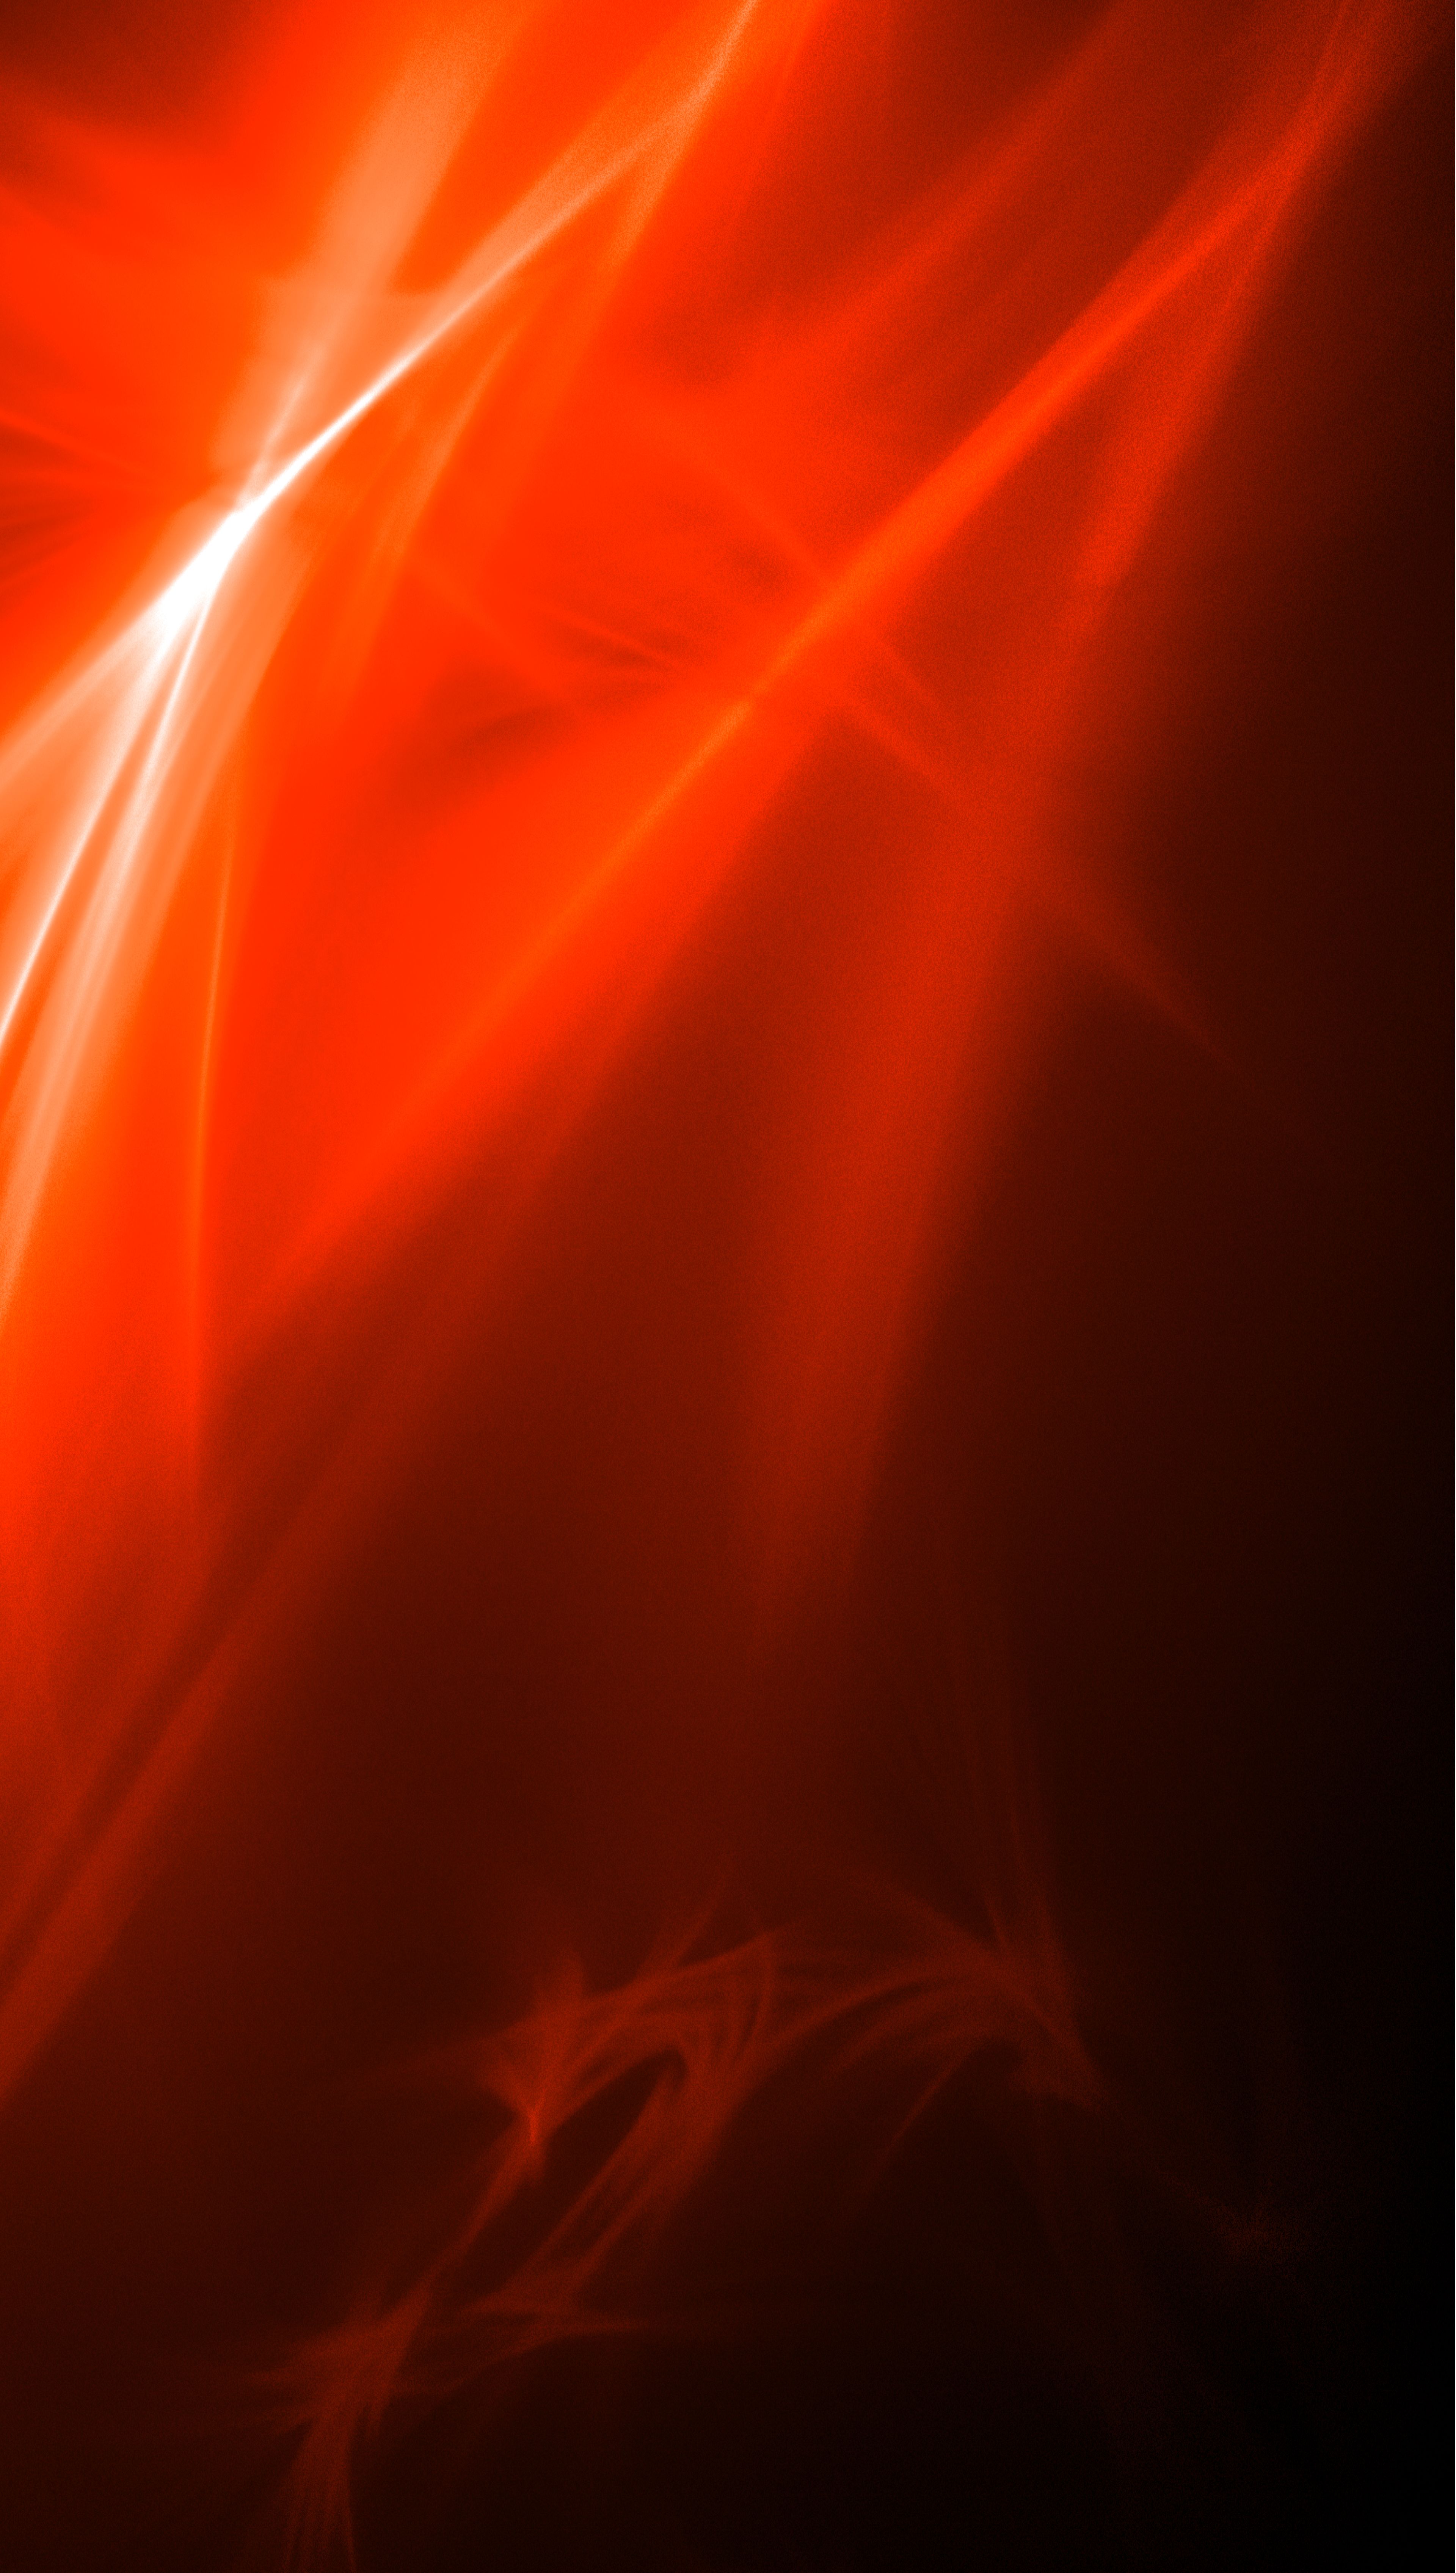 Black background with white, red , orange light flares